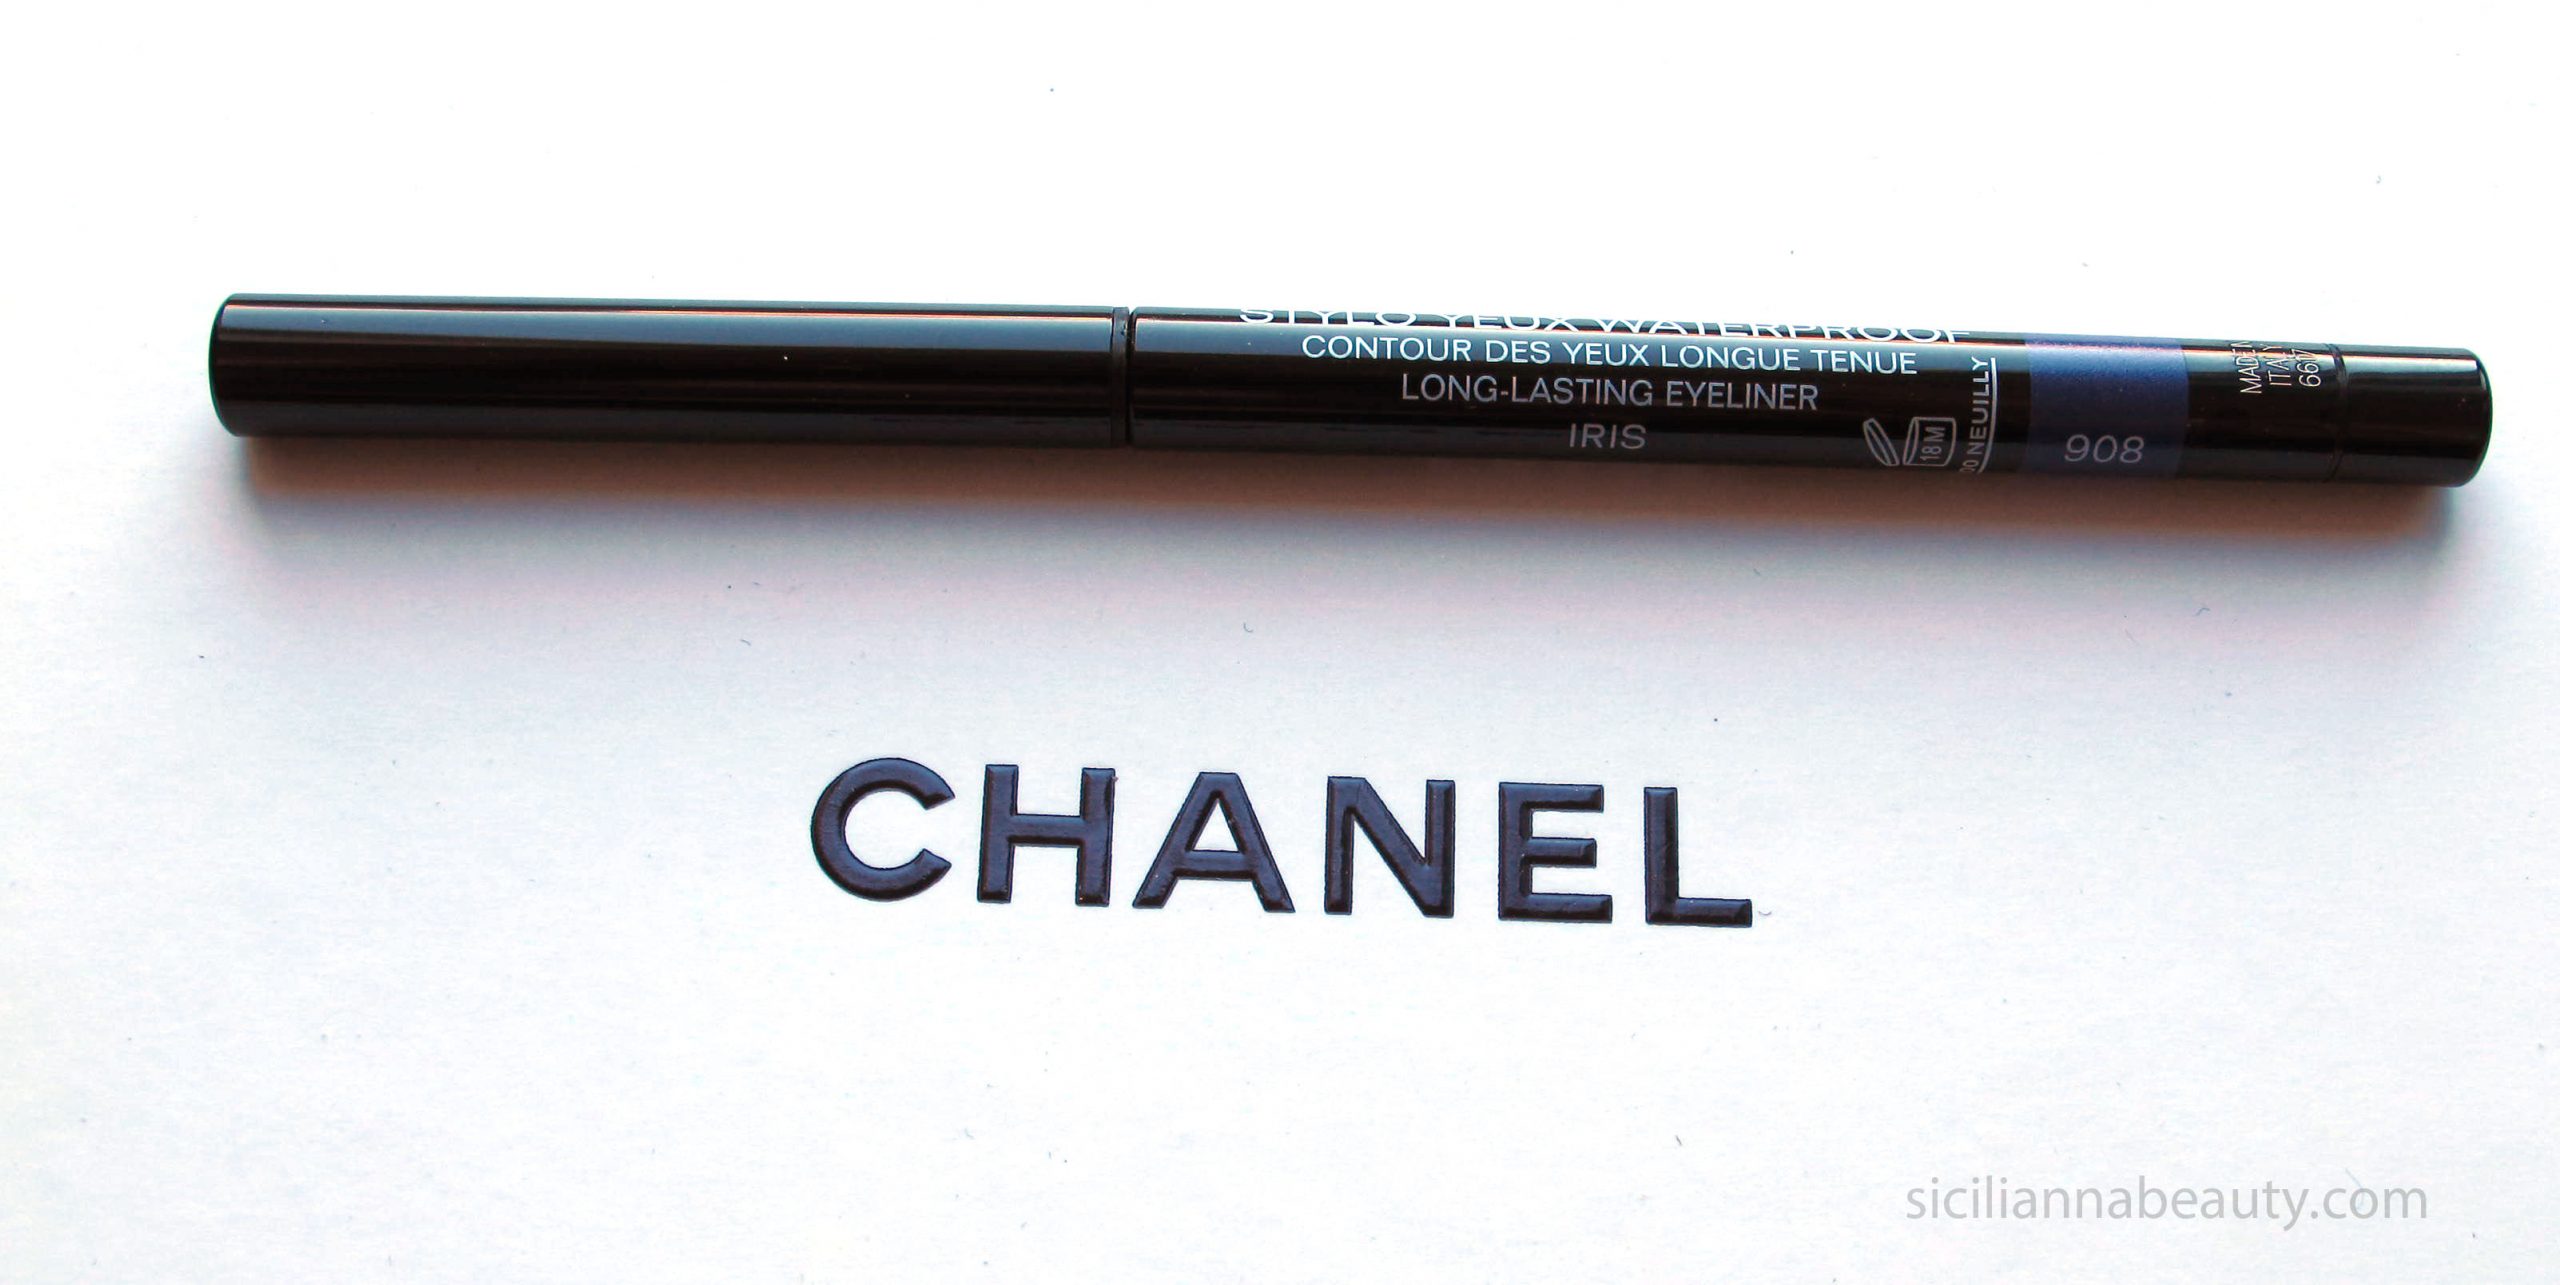 REVIEW: Chanel Stylo Yeux Waterproof Long-Lasting Eyeliner